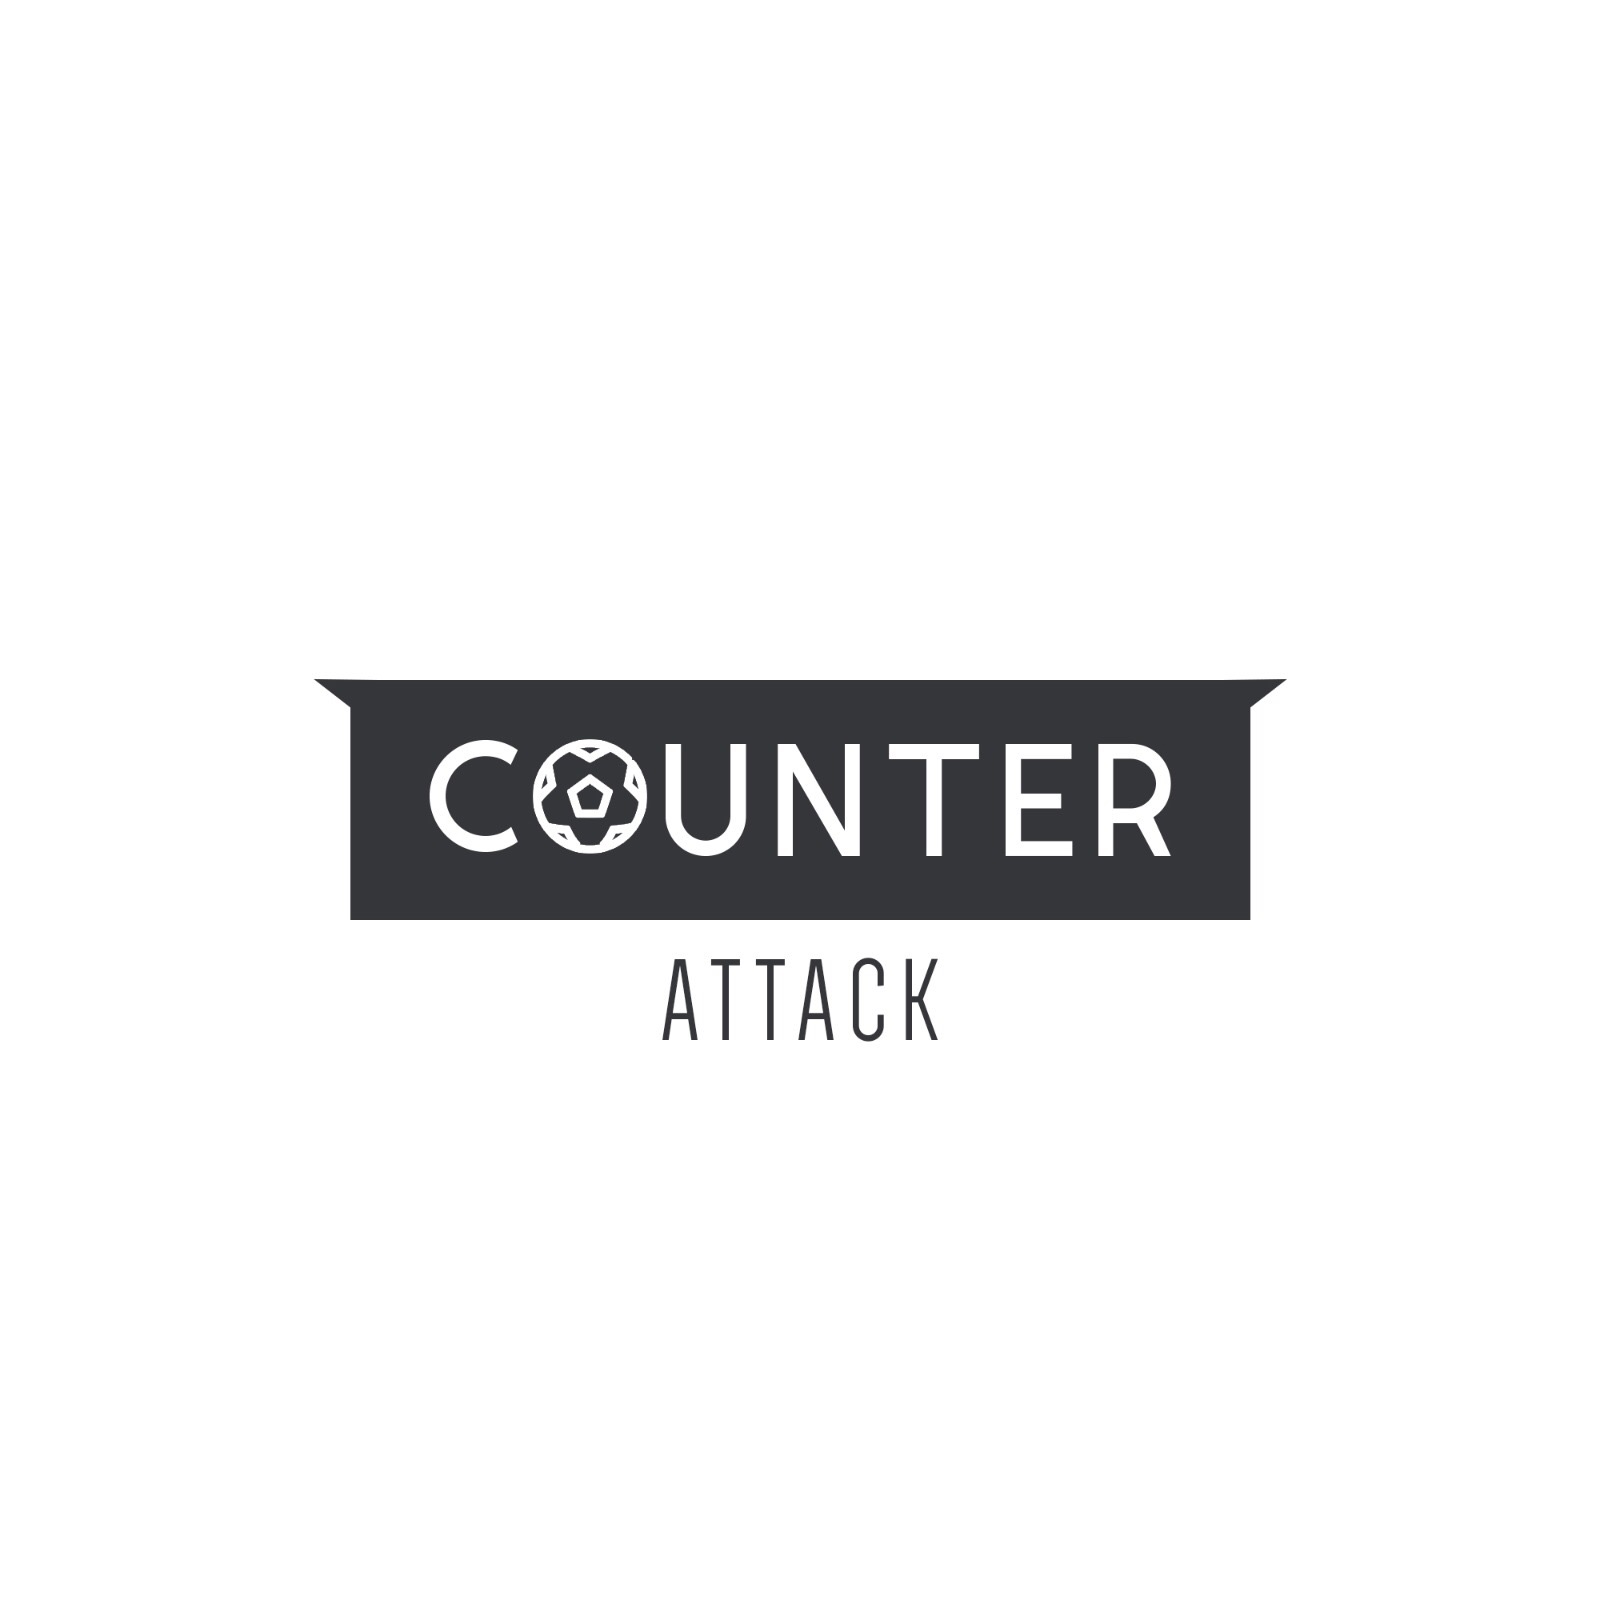 Counter Attack - Episode 80 - Leroy Lita Calls It A Day